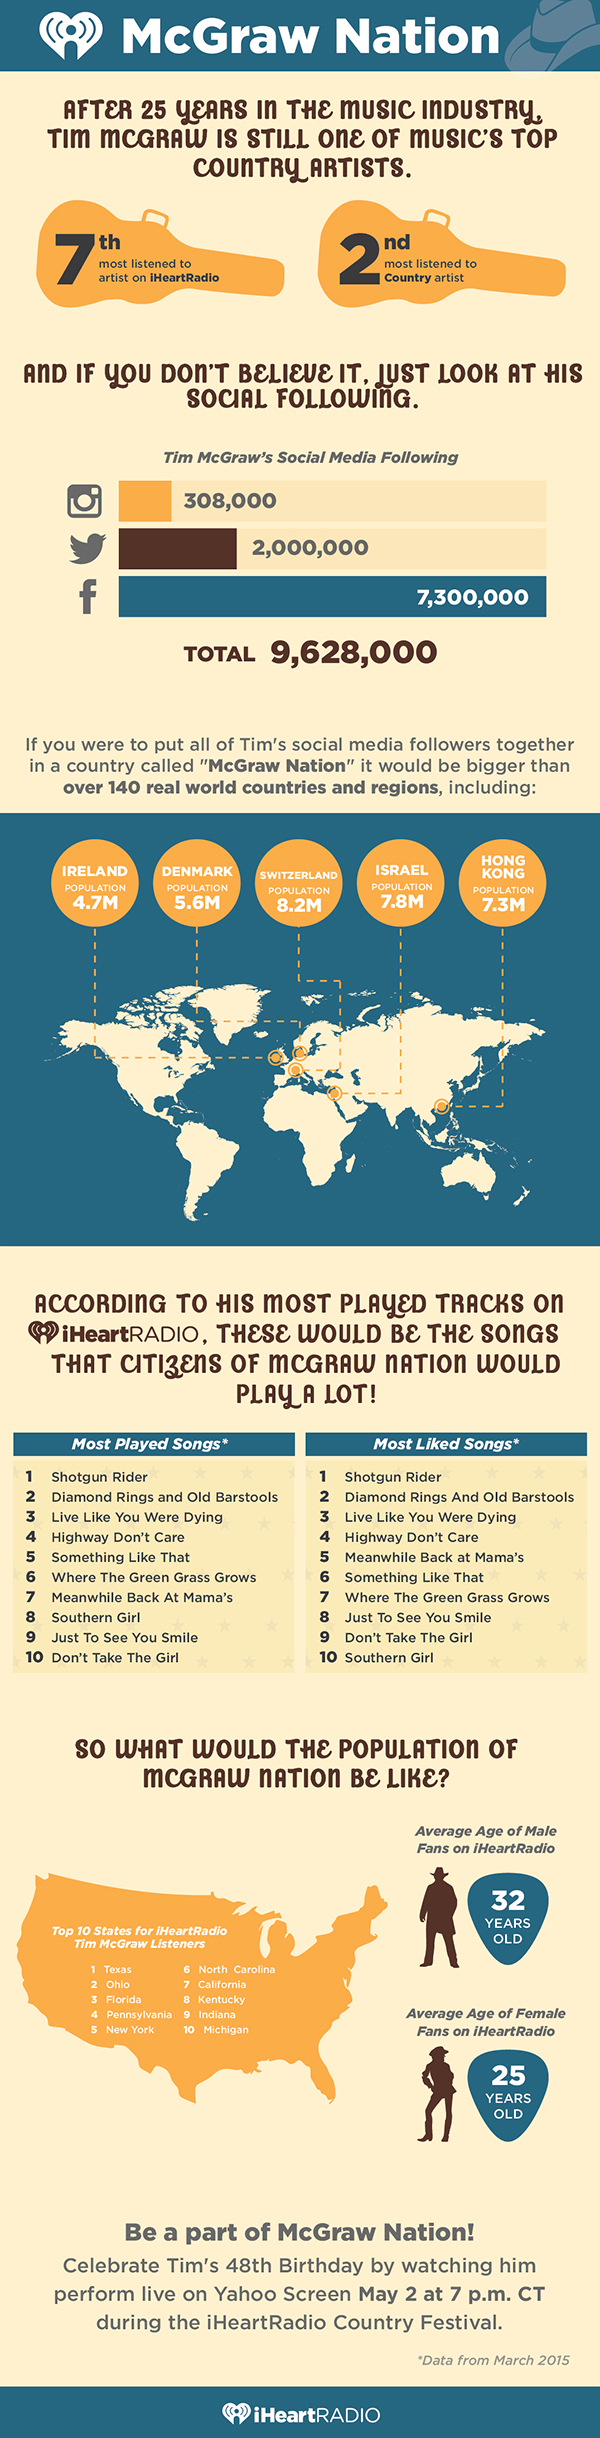 mcgraw-nation-infographic.jpg